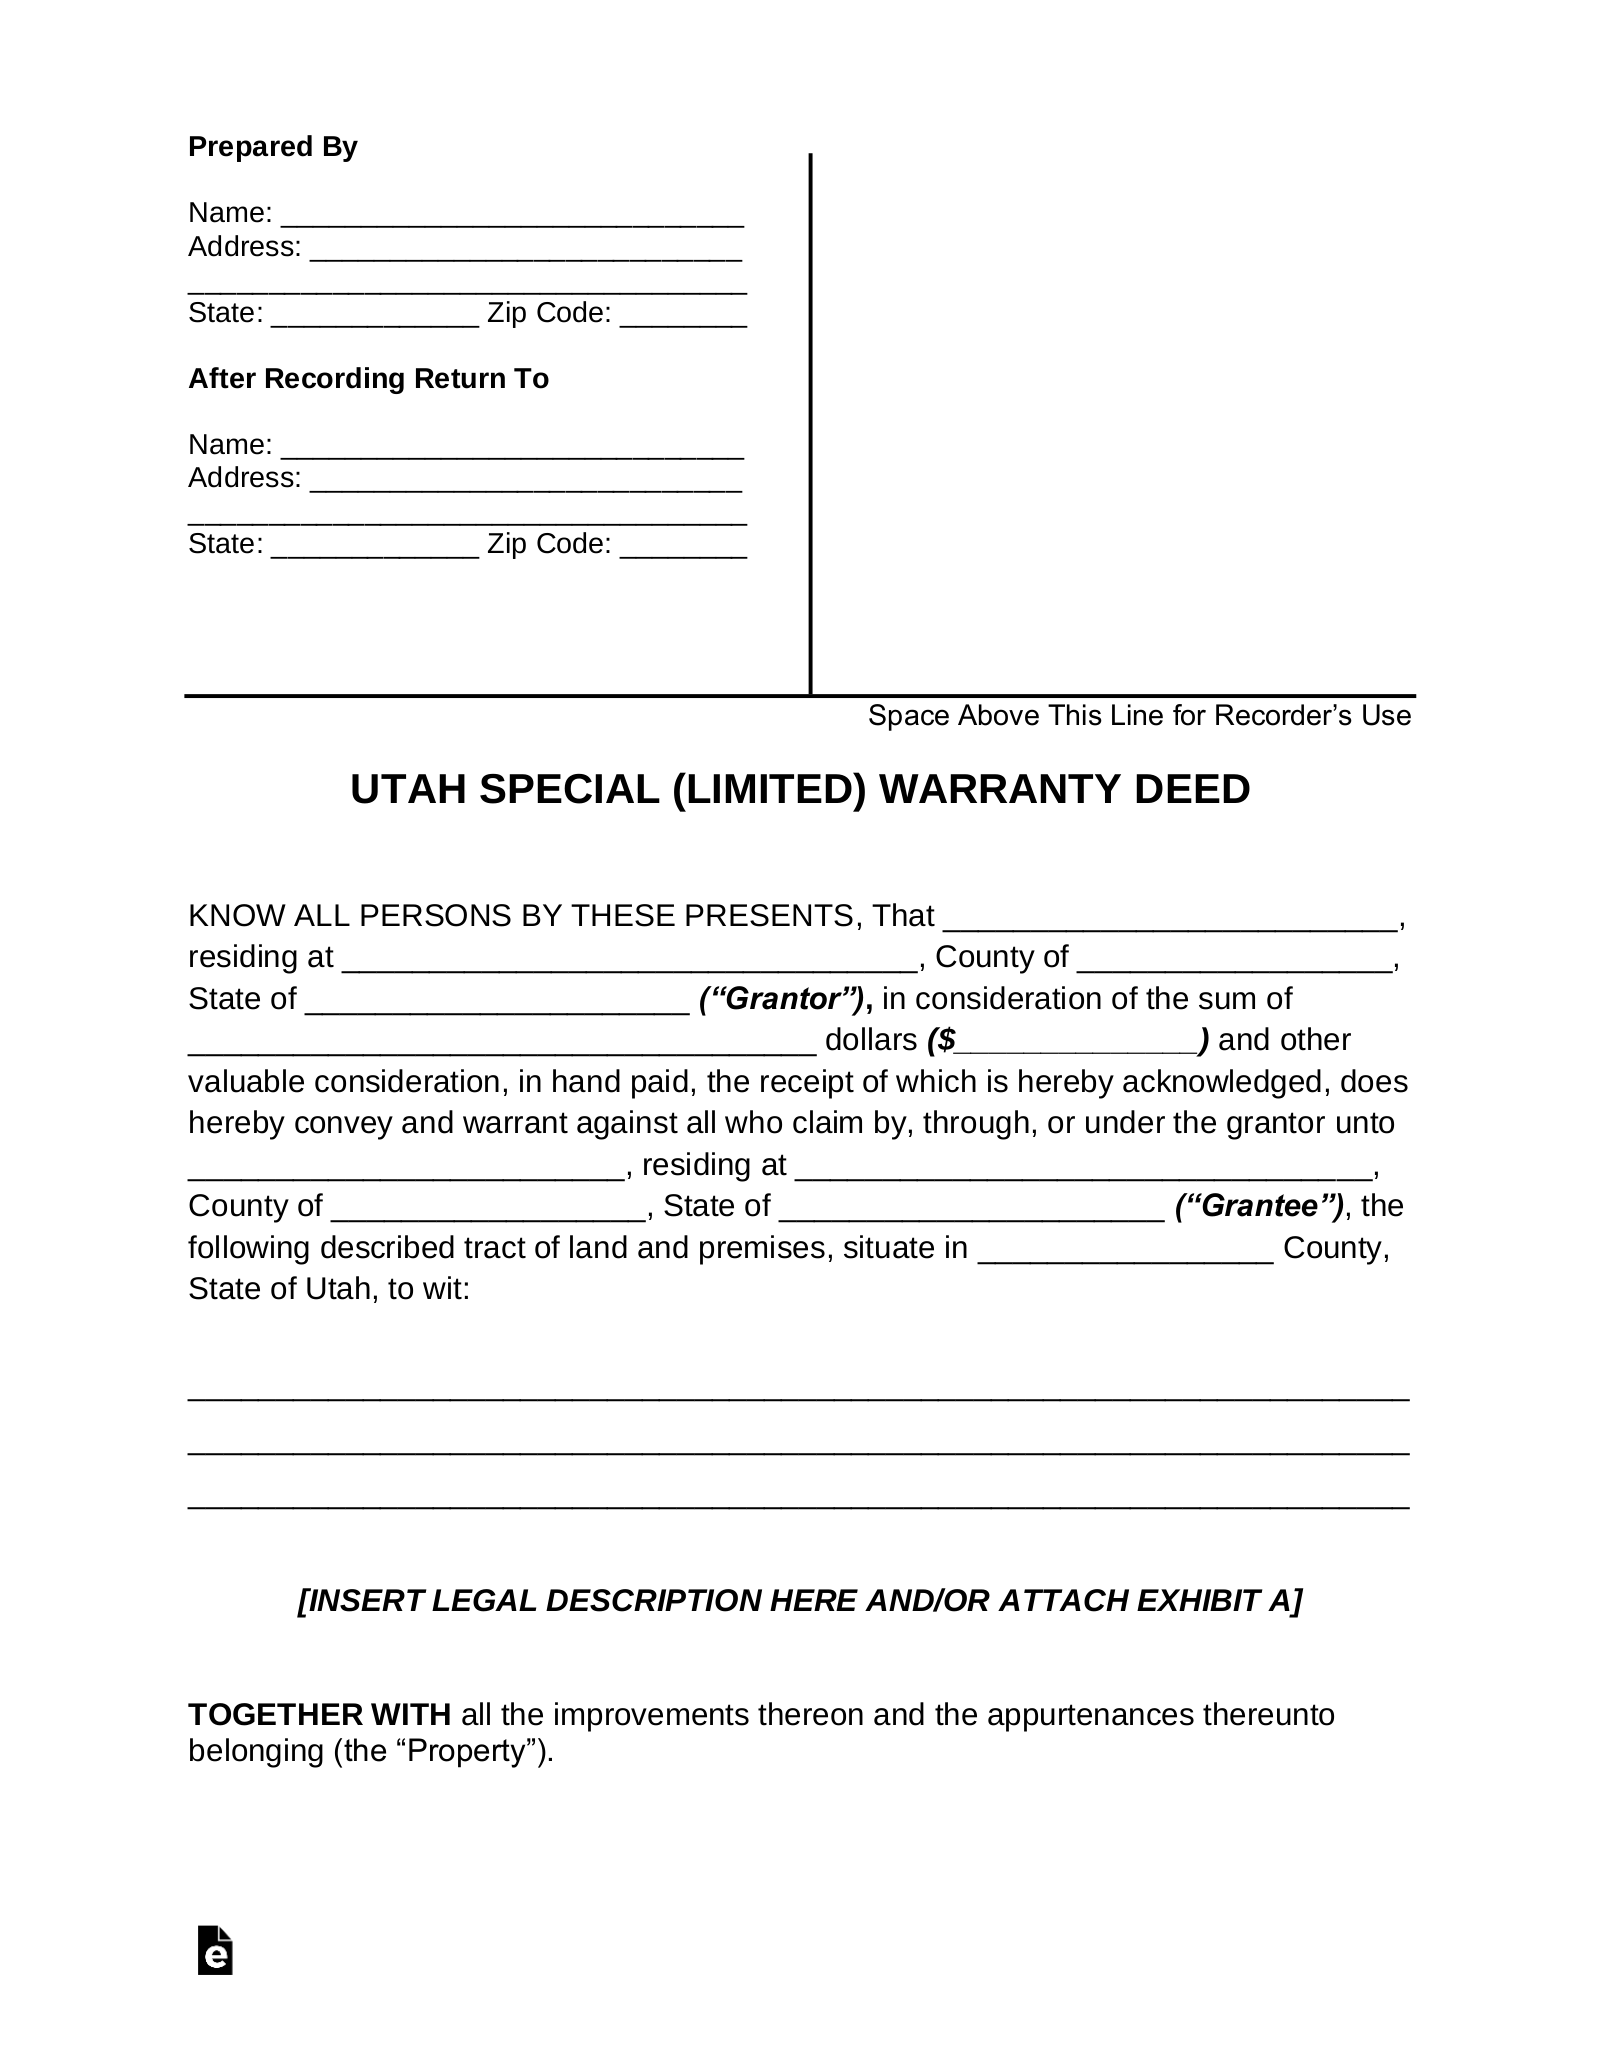 Utah Special Warranty Deed